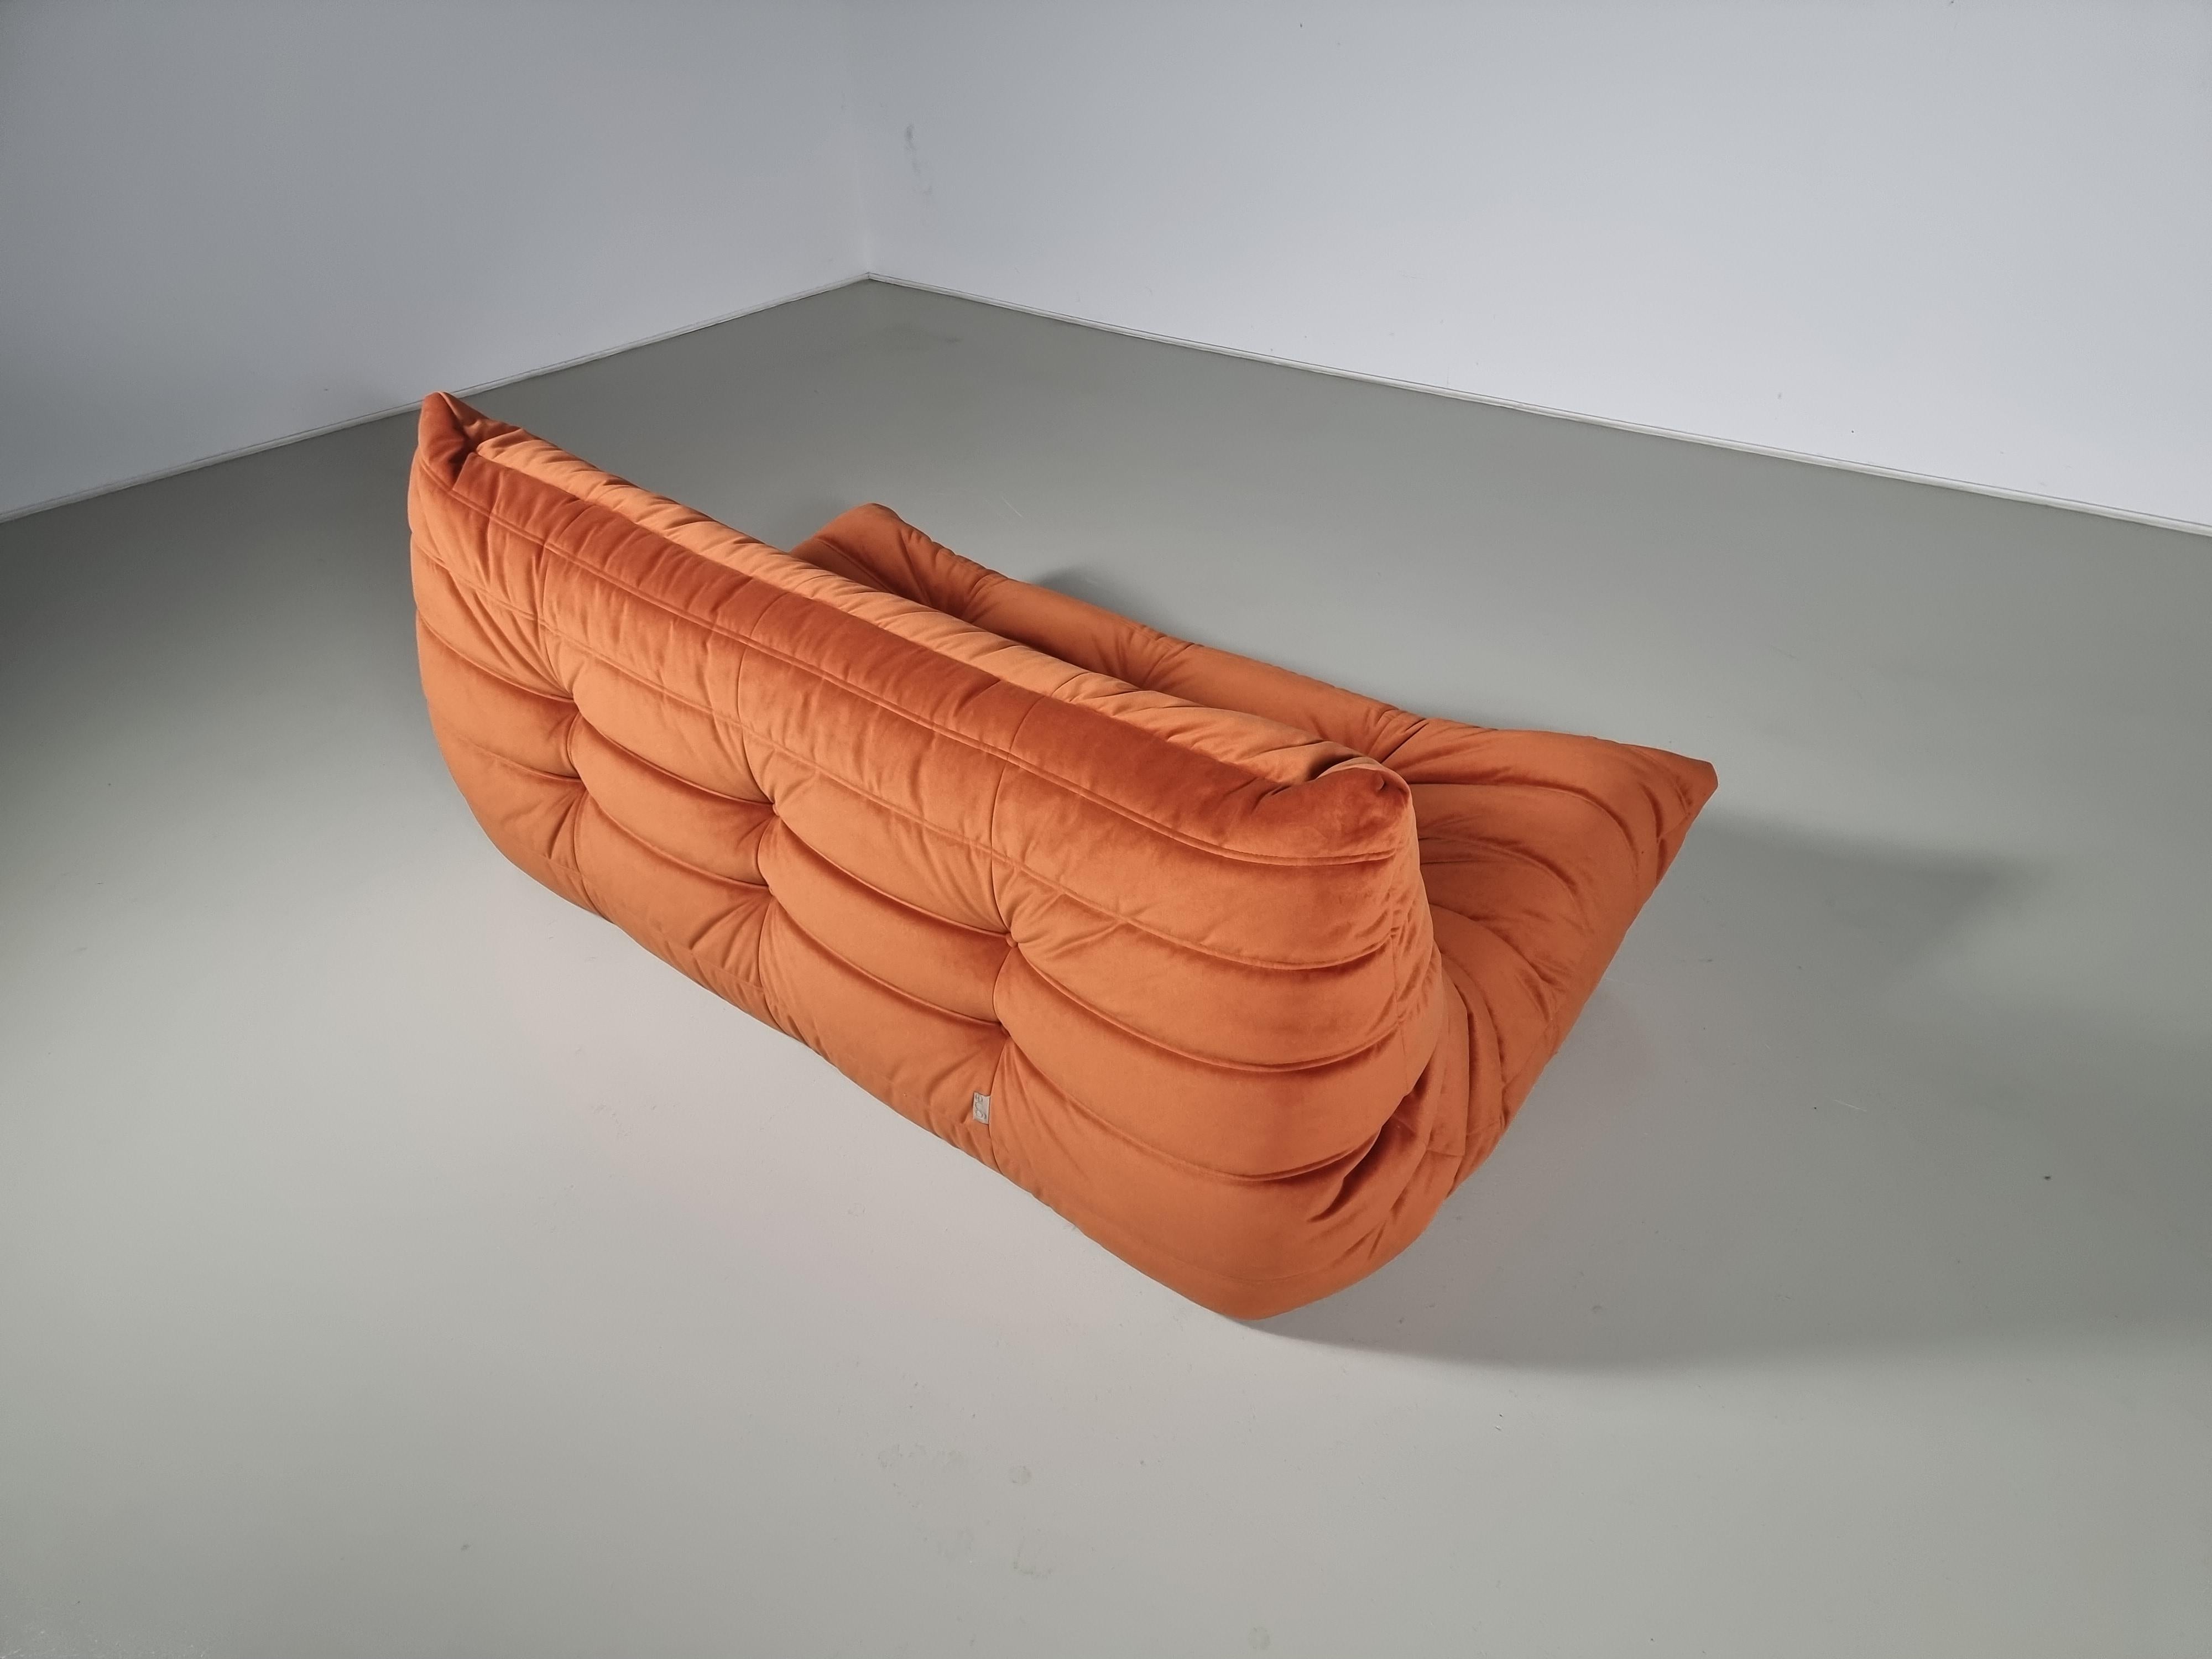 togo sofa orange